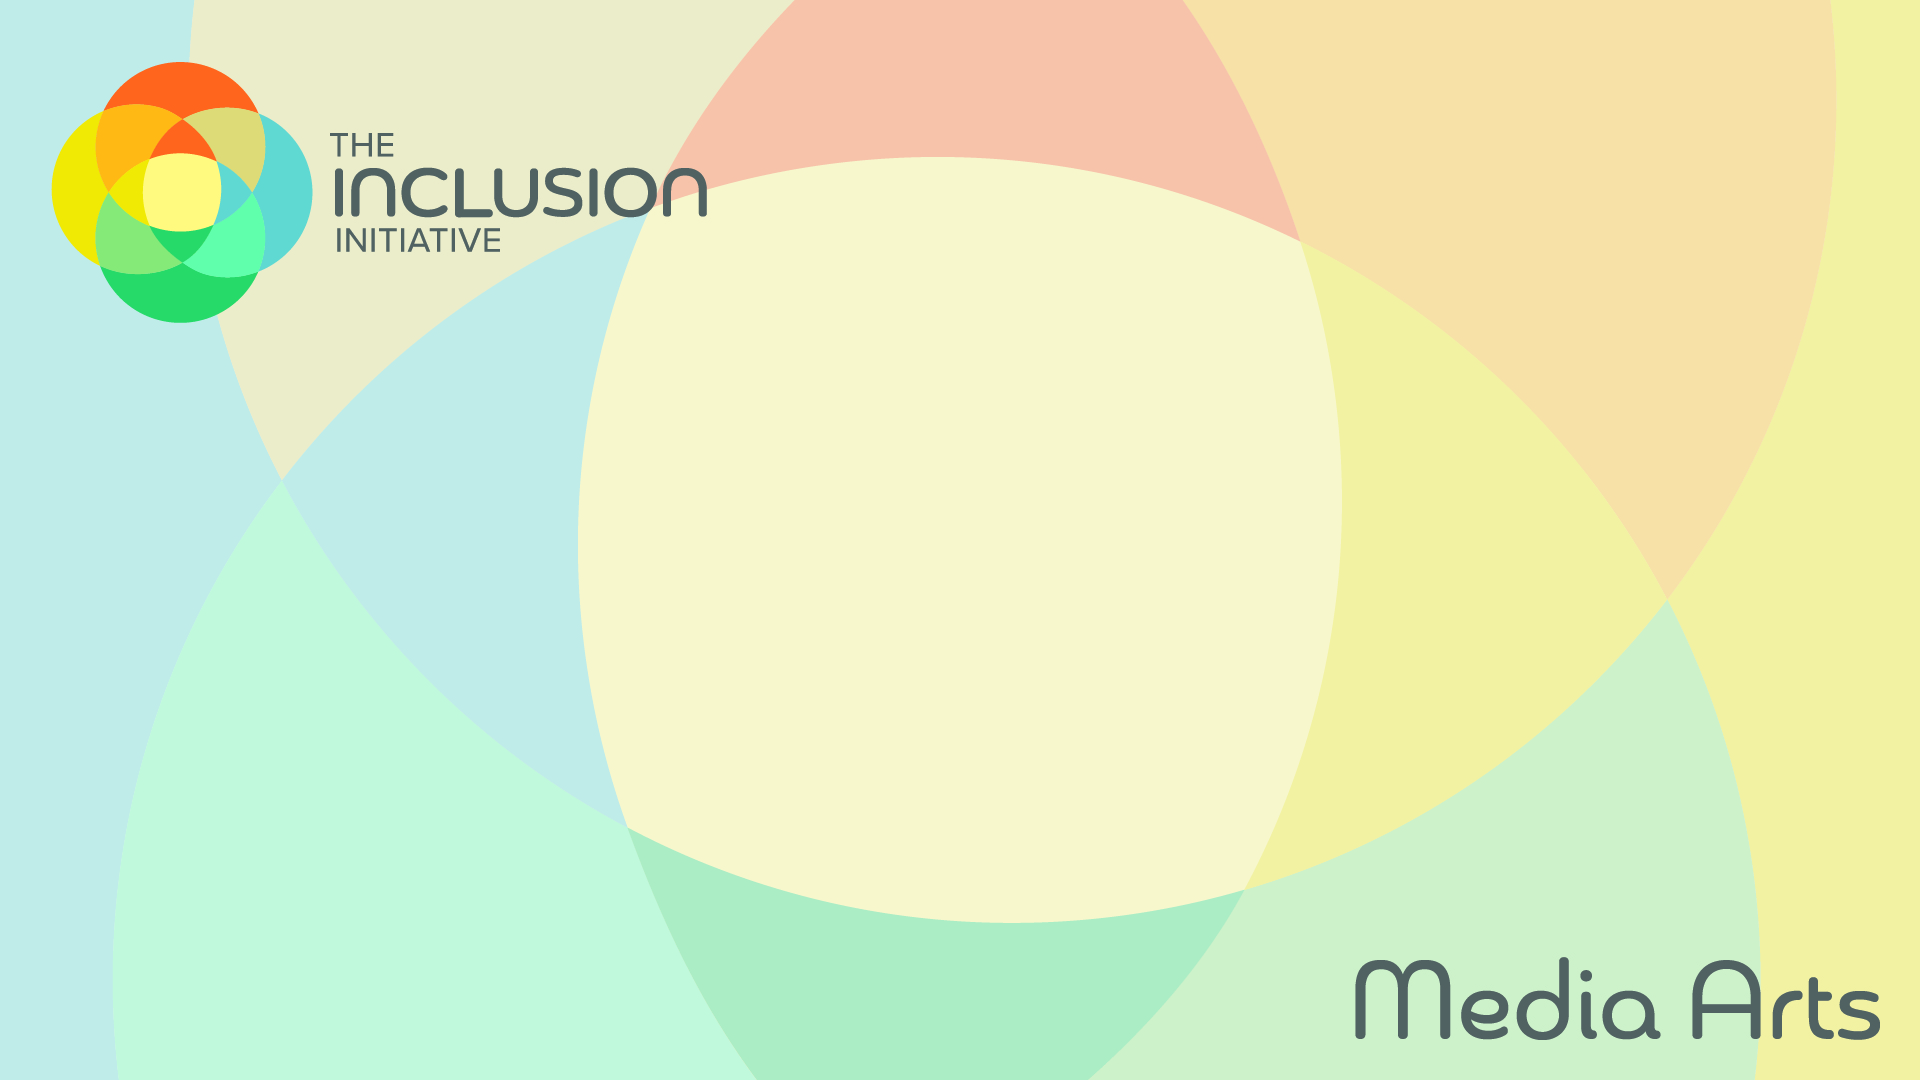 Inclusion Initiative Logo and Media Arts